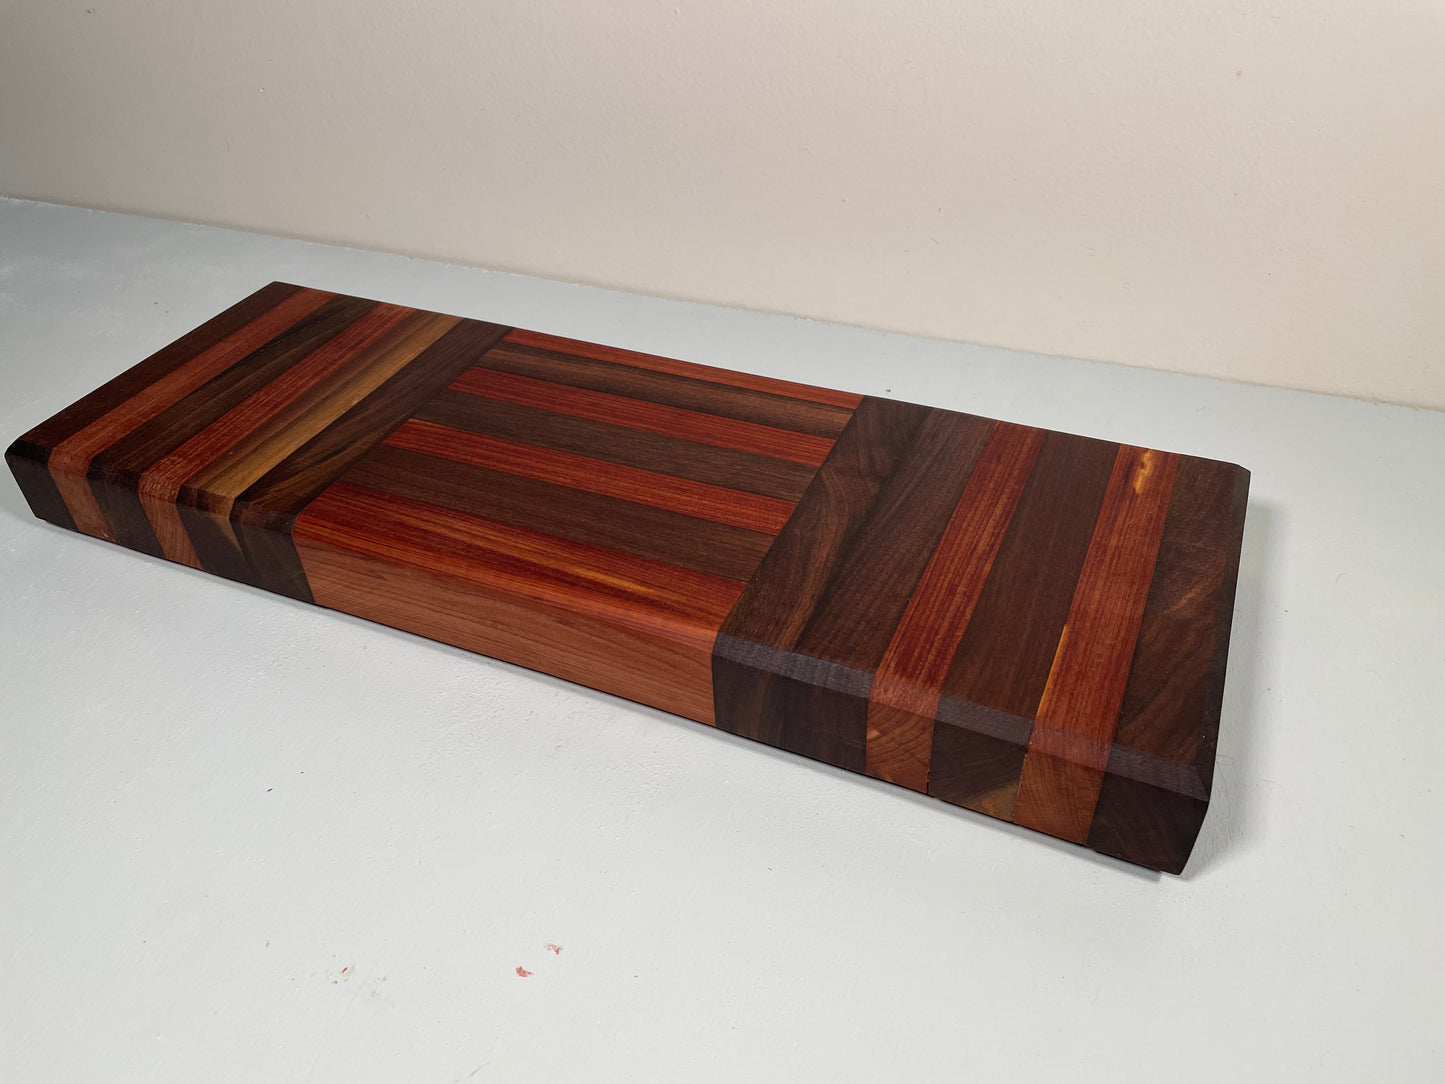 Walnut and Cedar Boombox style cutting board